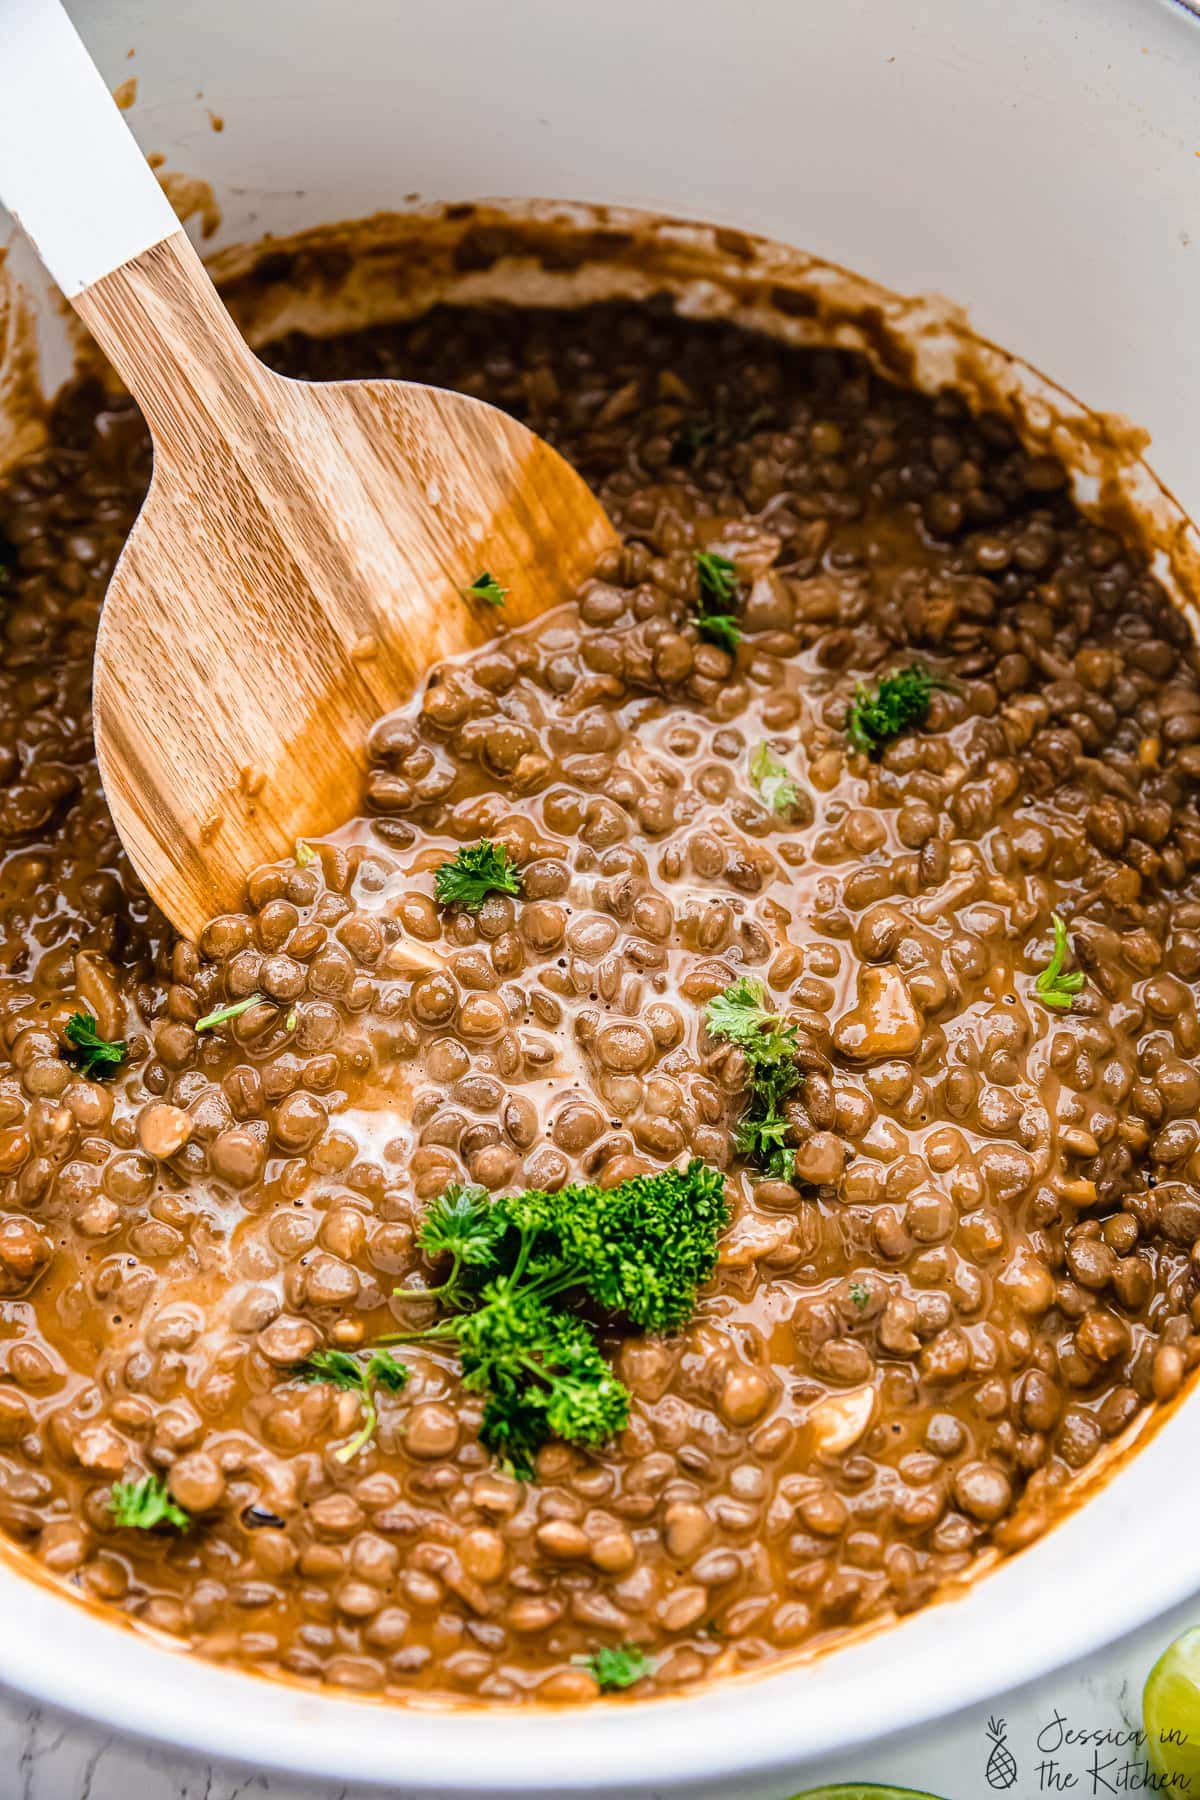 A large wood spoon stirring vegan lentil stew.